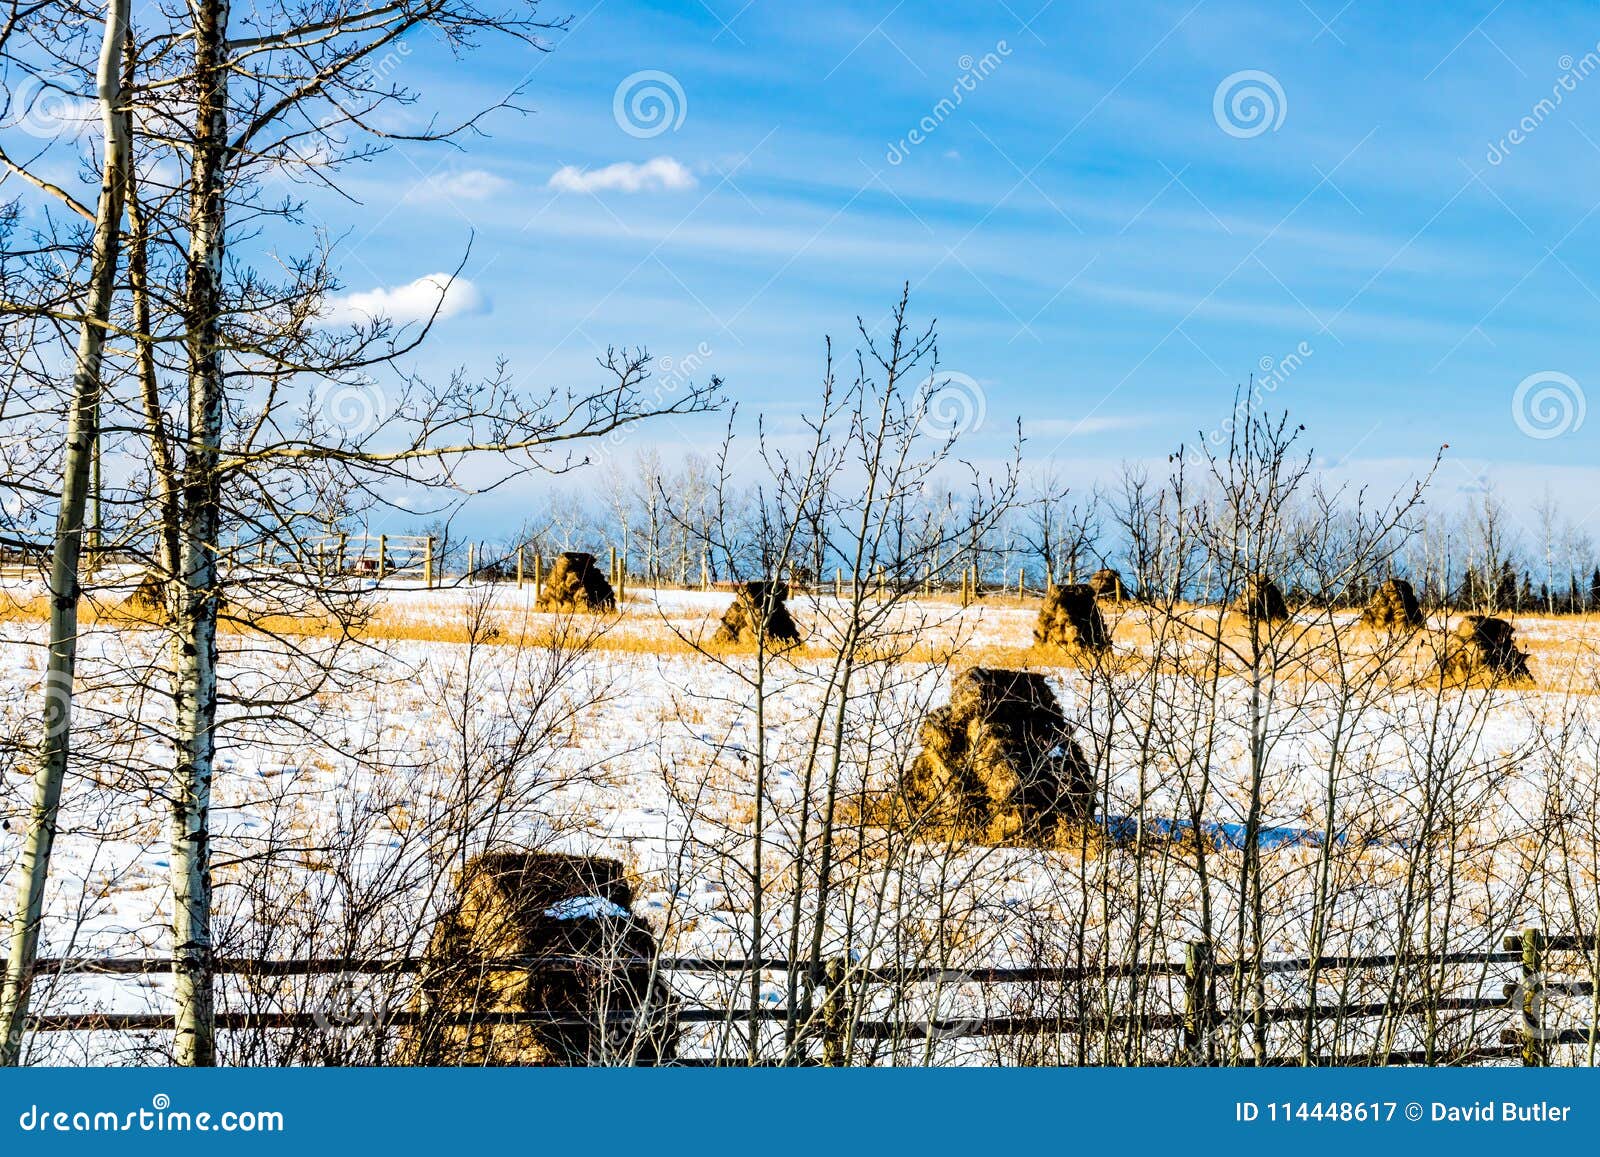 Hooibalen Op Een Sneeuwgebied, Cowboy Trail, Alberta, Canada Stock ...